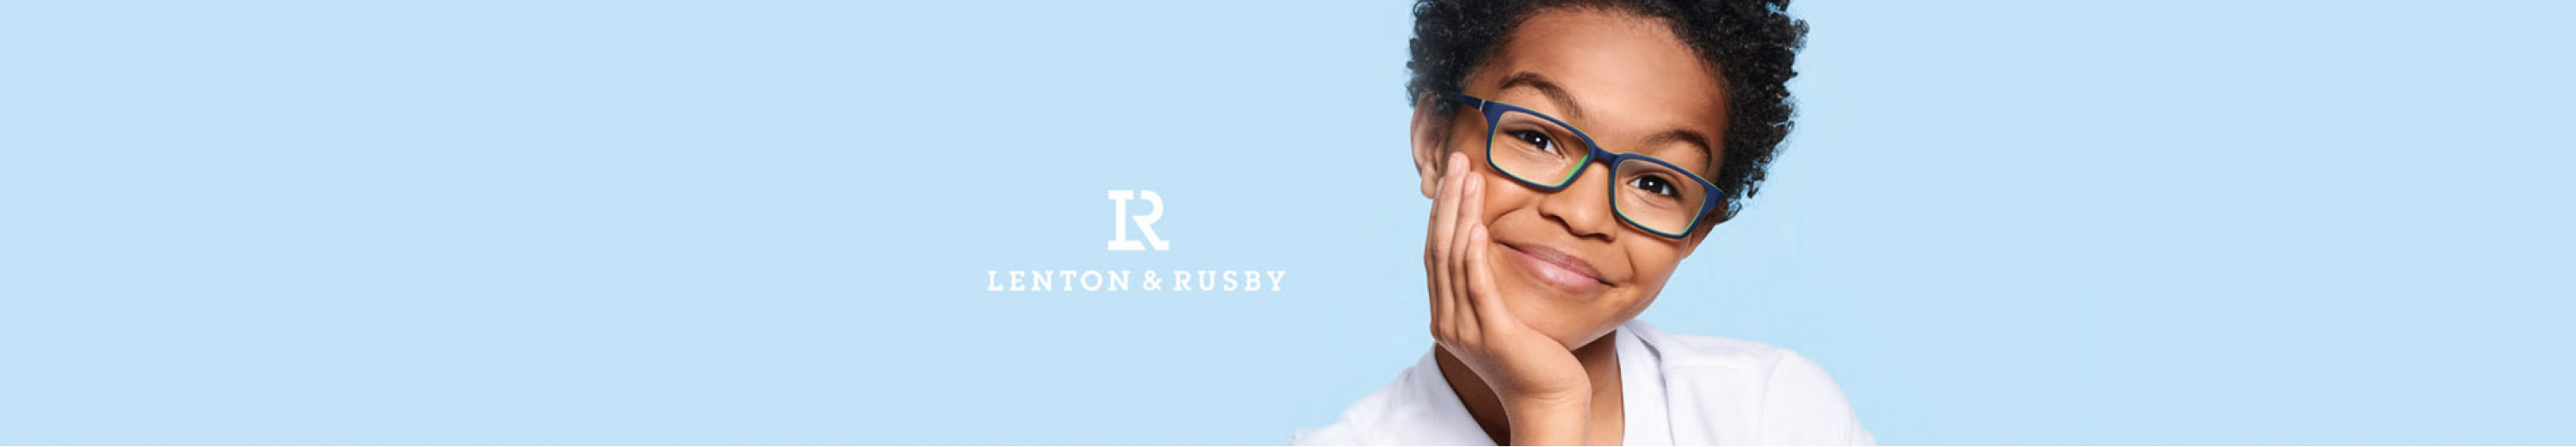 Lenton and Rusby Eyeglasses for Kids